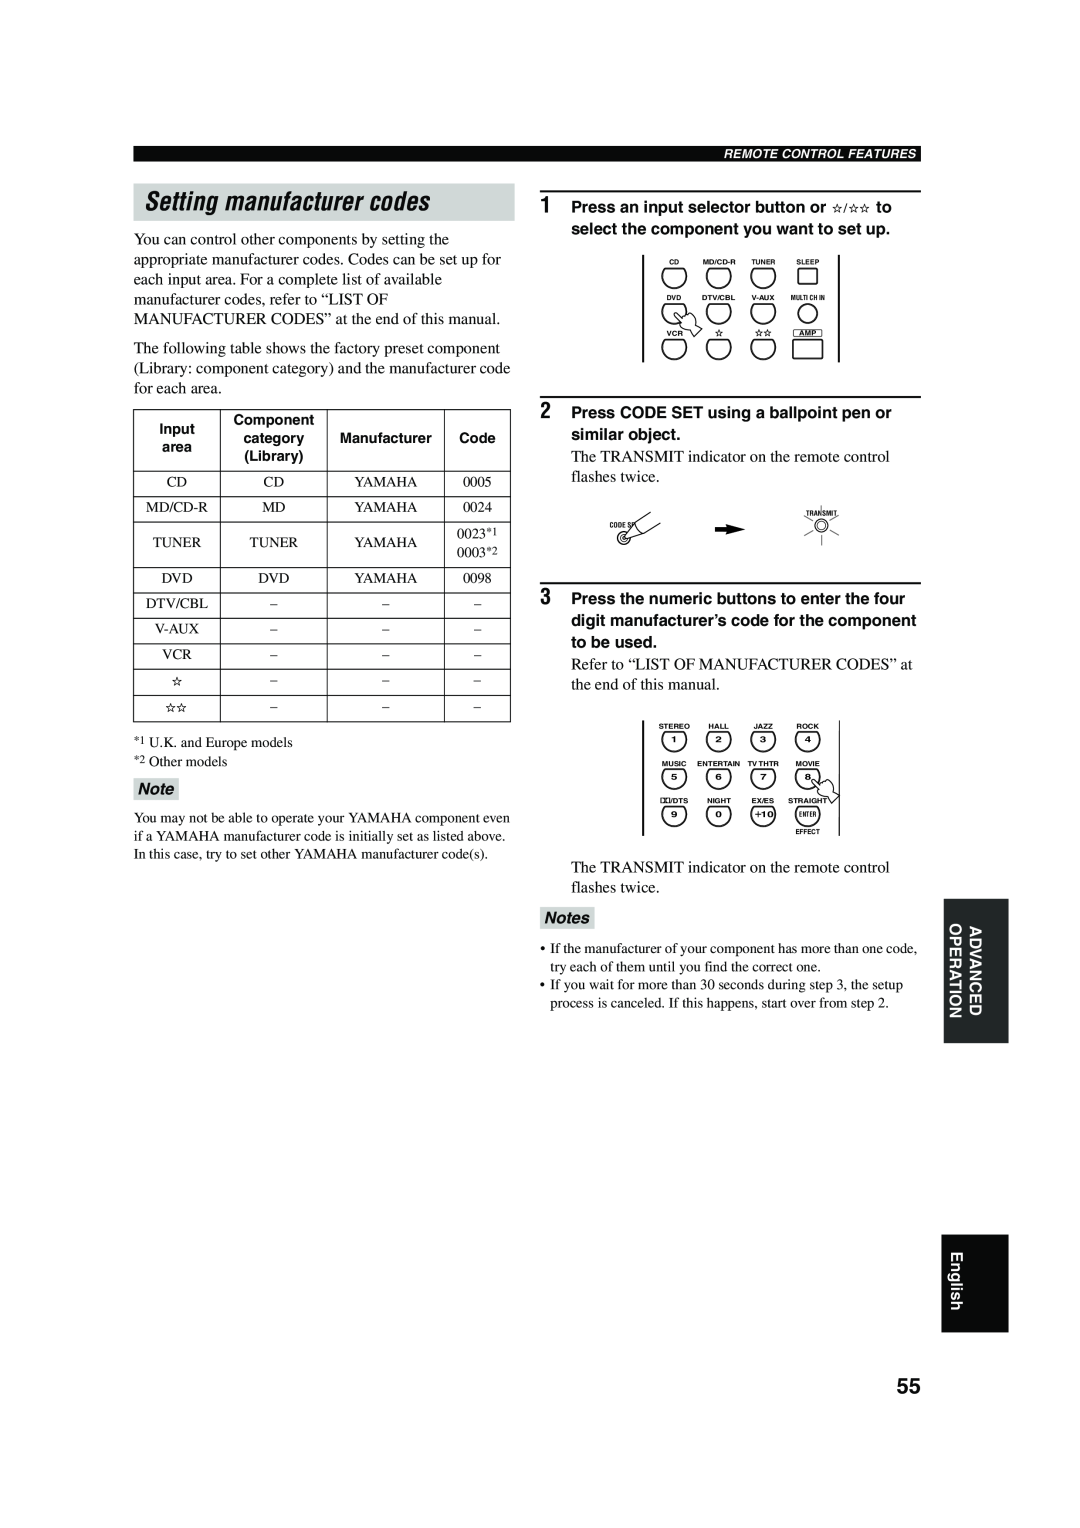 Yamaha RX-V550 owner manual Setting manufacturer codes, Input, Component, Code 